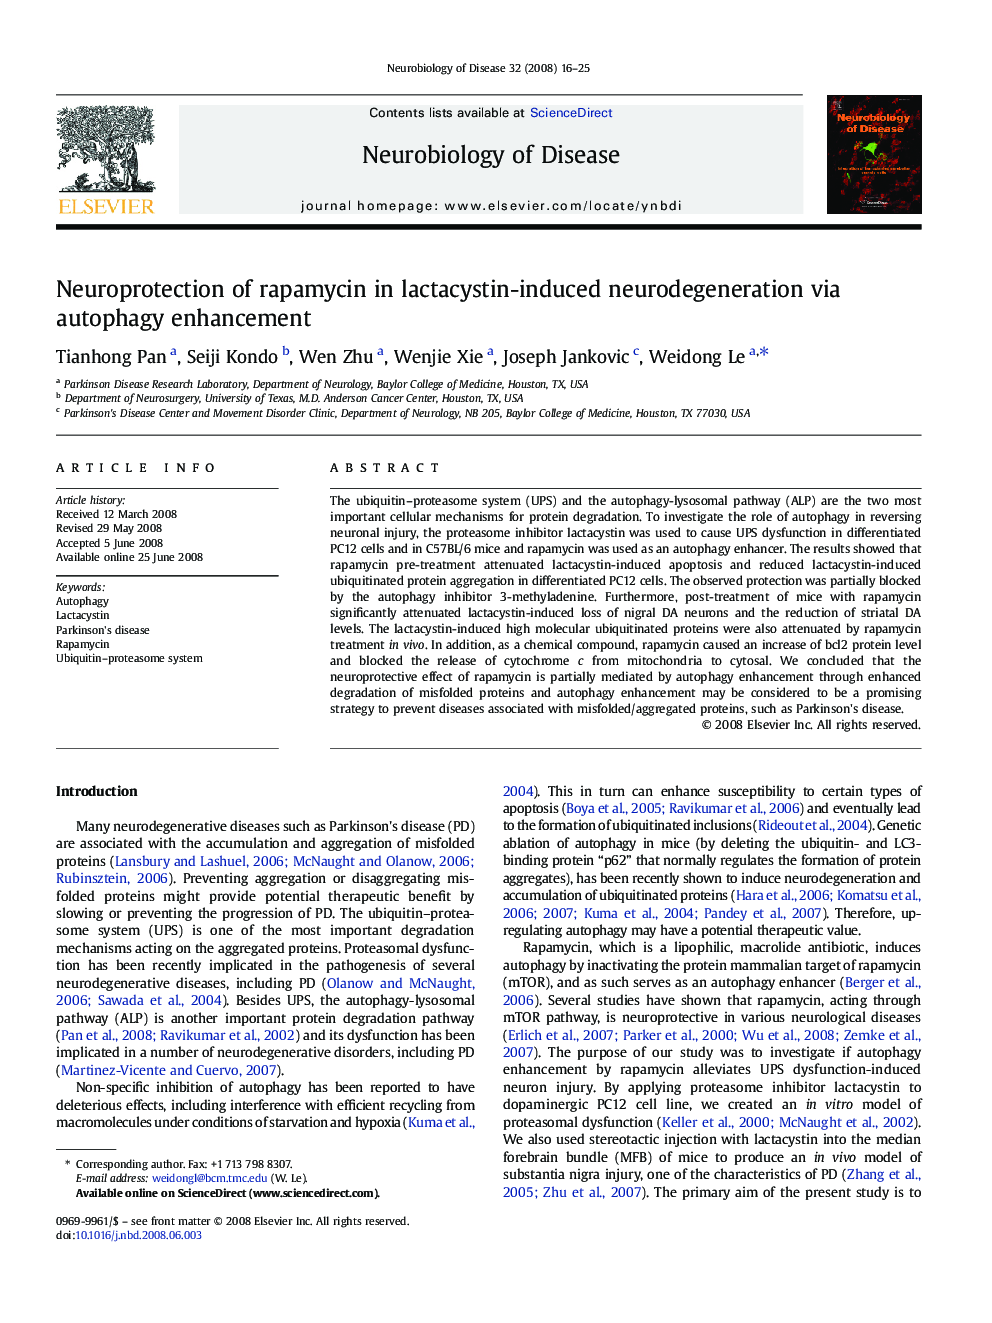 Neuroprotection of rapamycin in lactacystin-induced neurodegeneration via autophagy enhancement